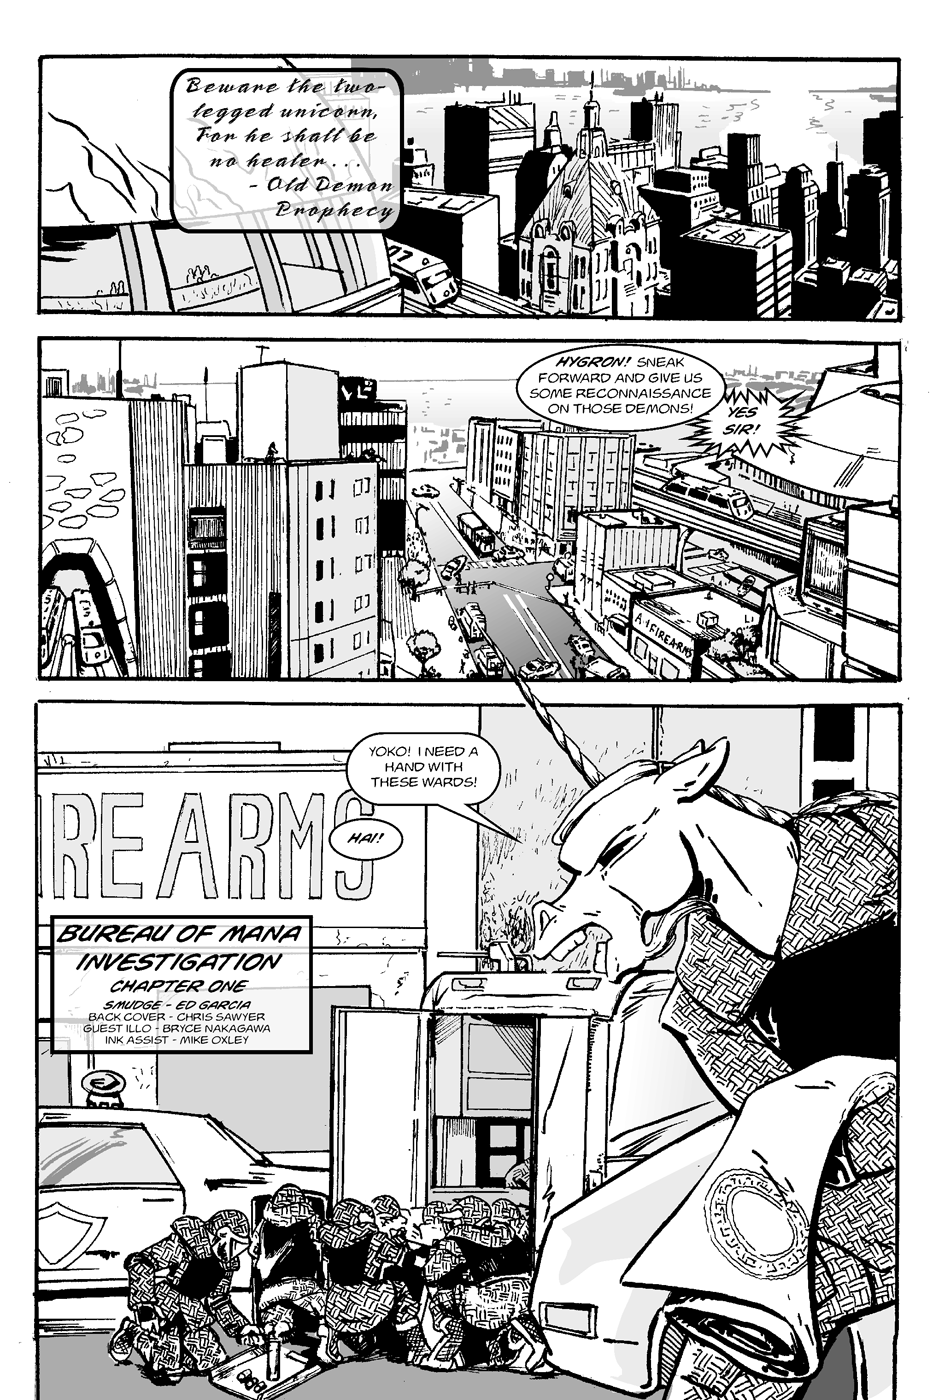 Read online Bureau of Mana Investigation comic -  Issue #1 - 3